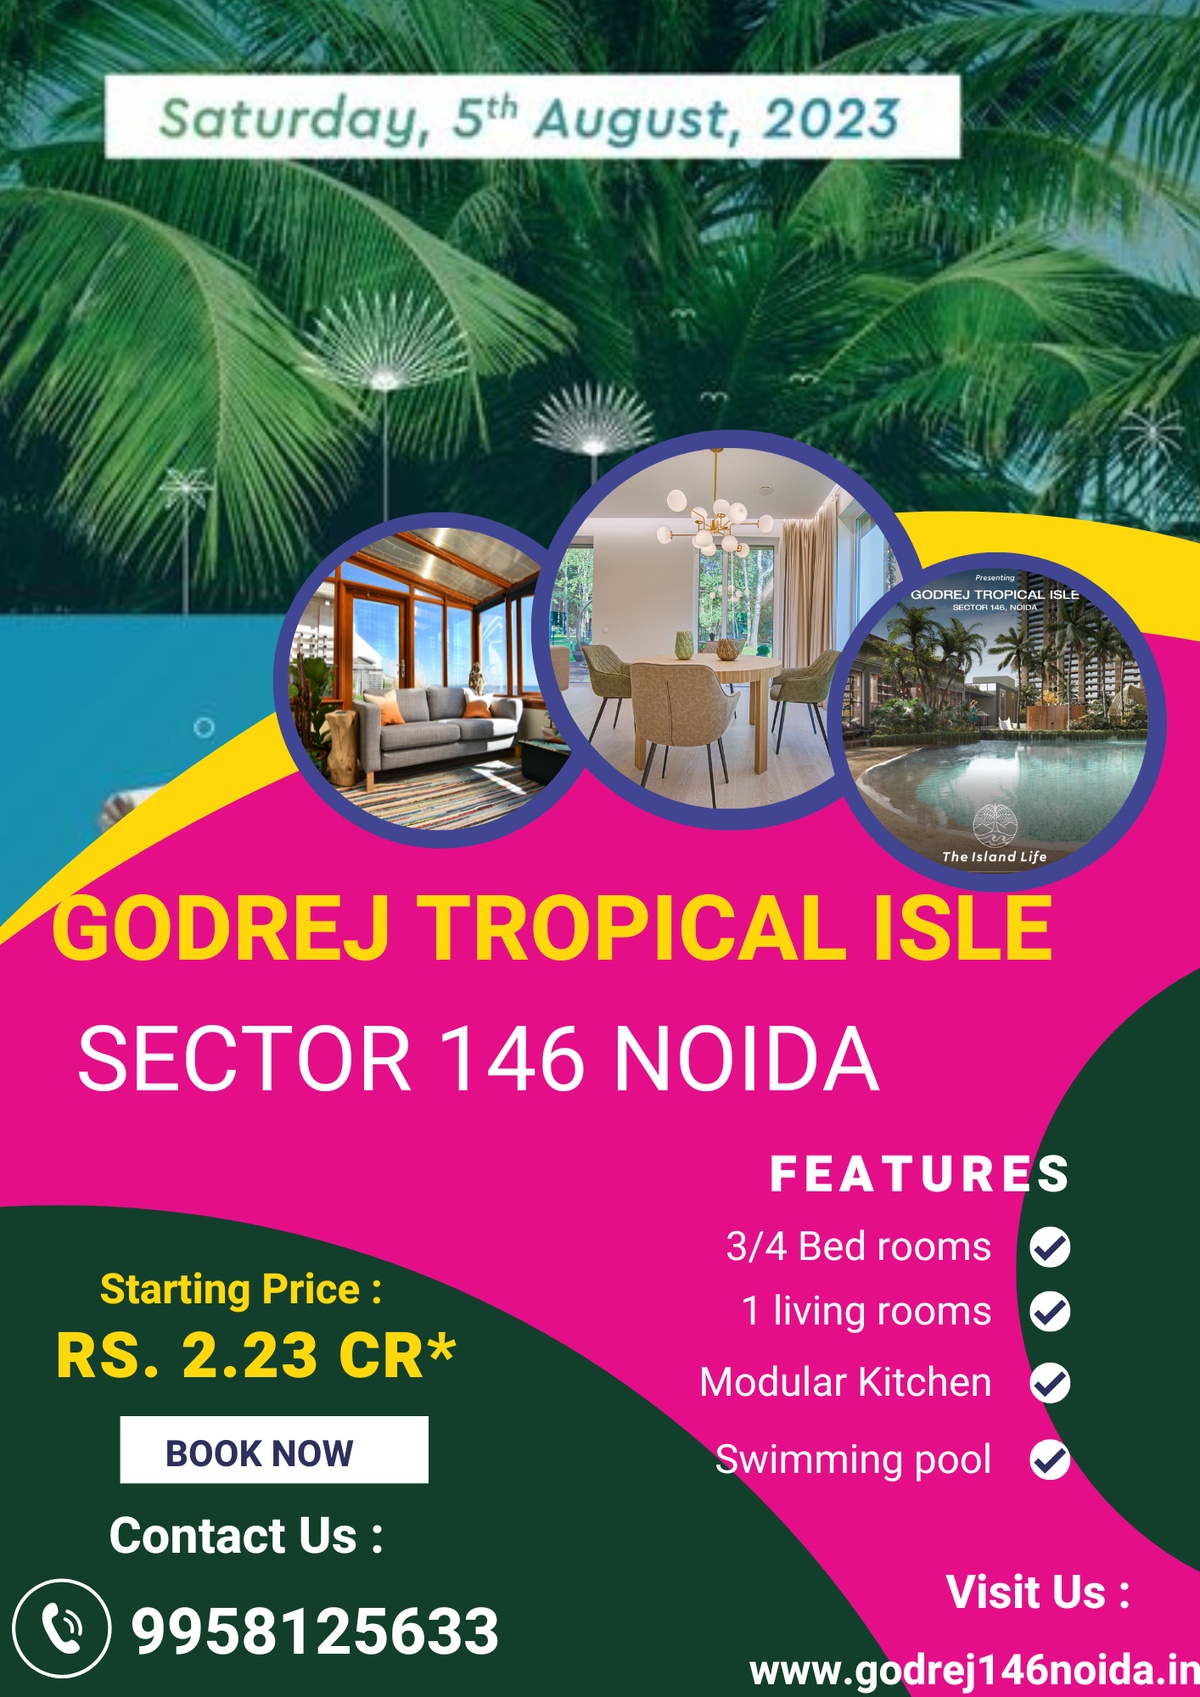 Godrej 146 Noida: The Ideal Combination of Comfort